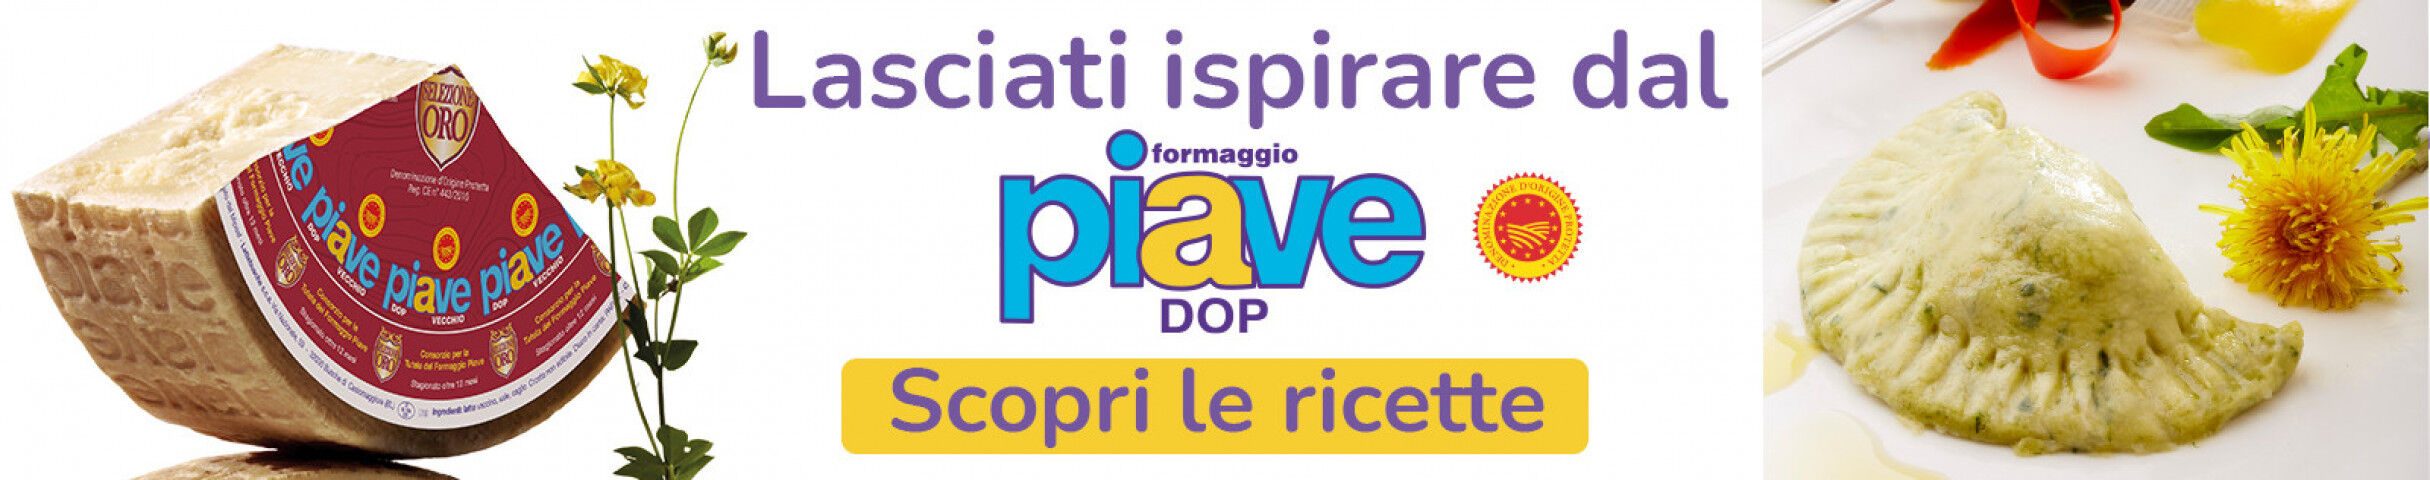 Banner Formaggio Piave-2020202